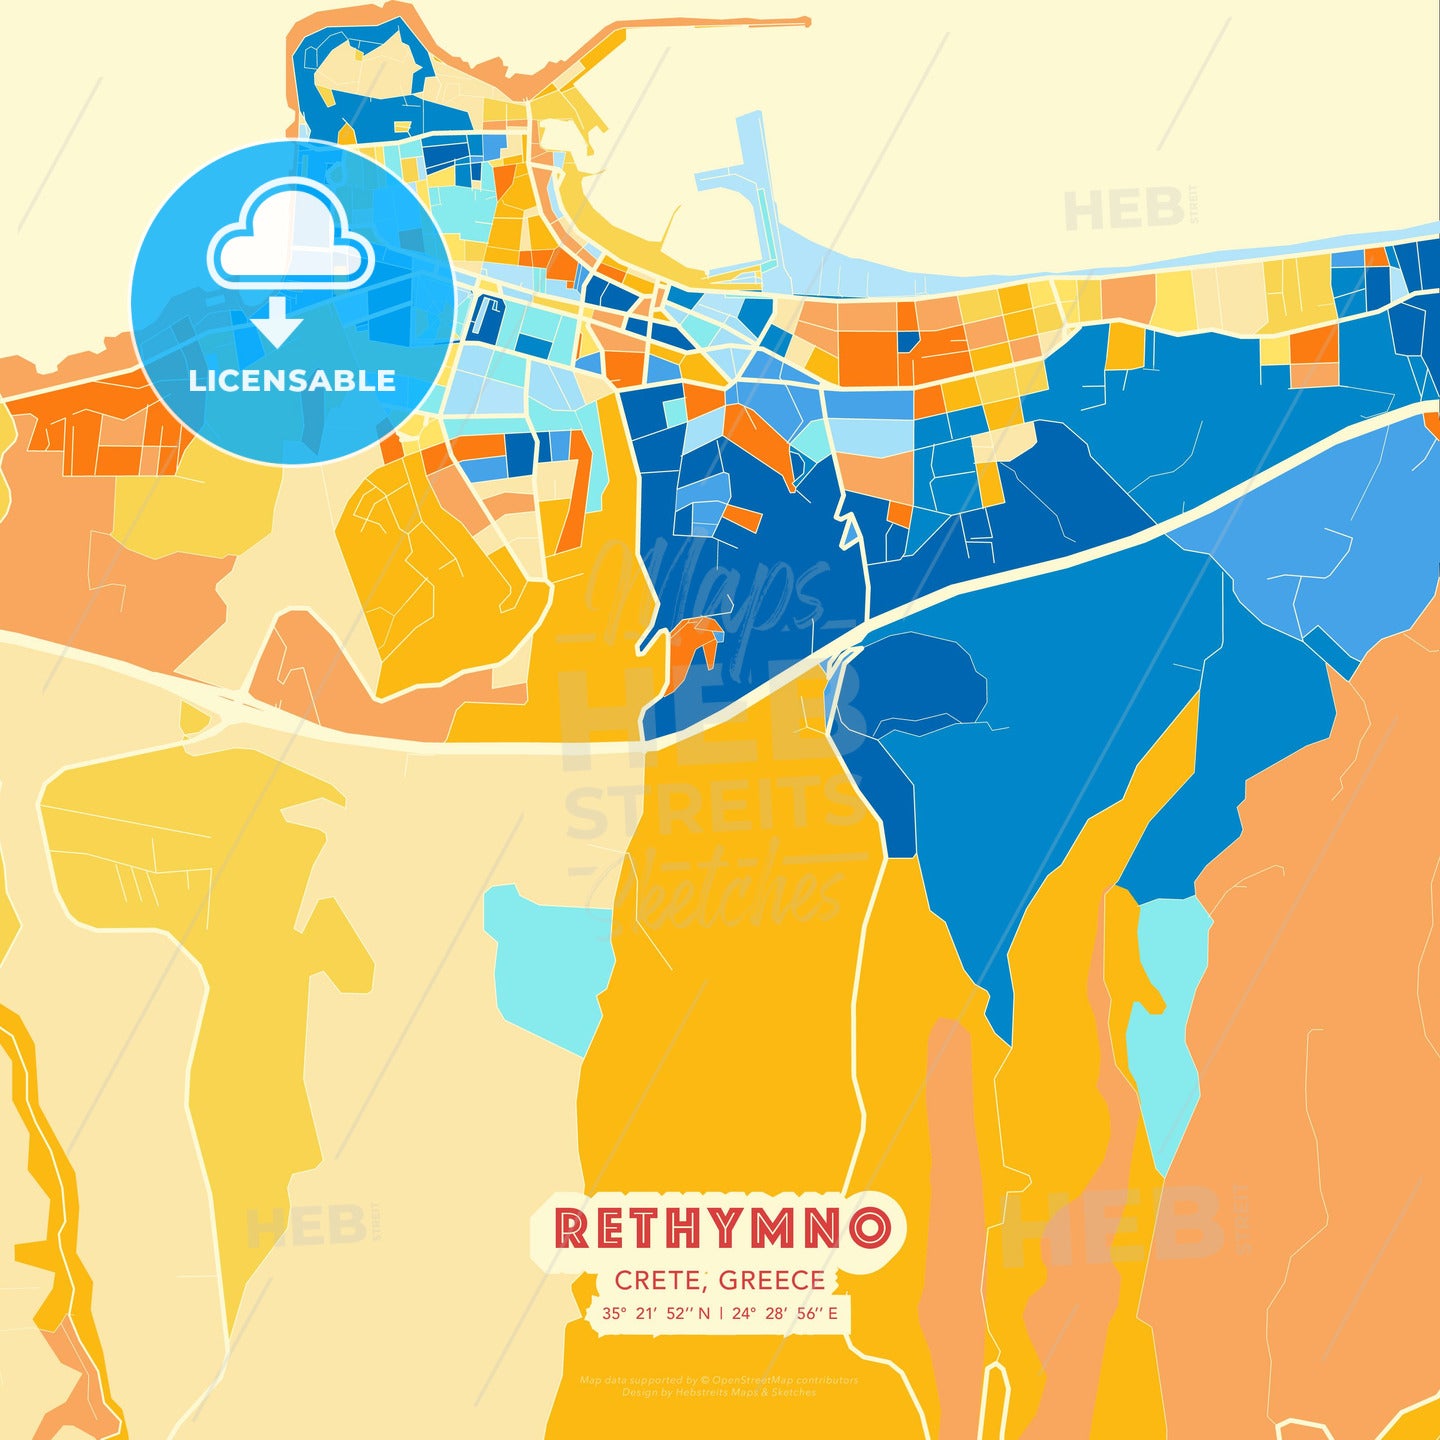 Rethymno, Crete, Greece, map - HEBSTREITS Sketches